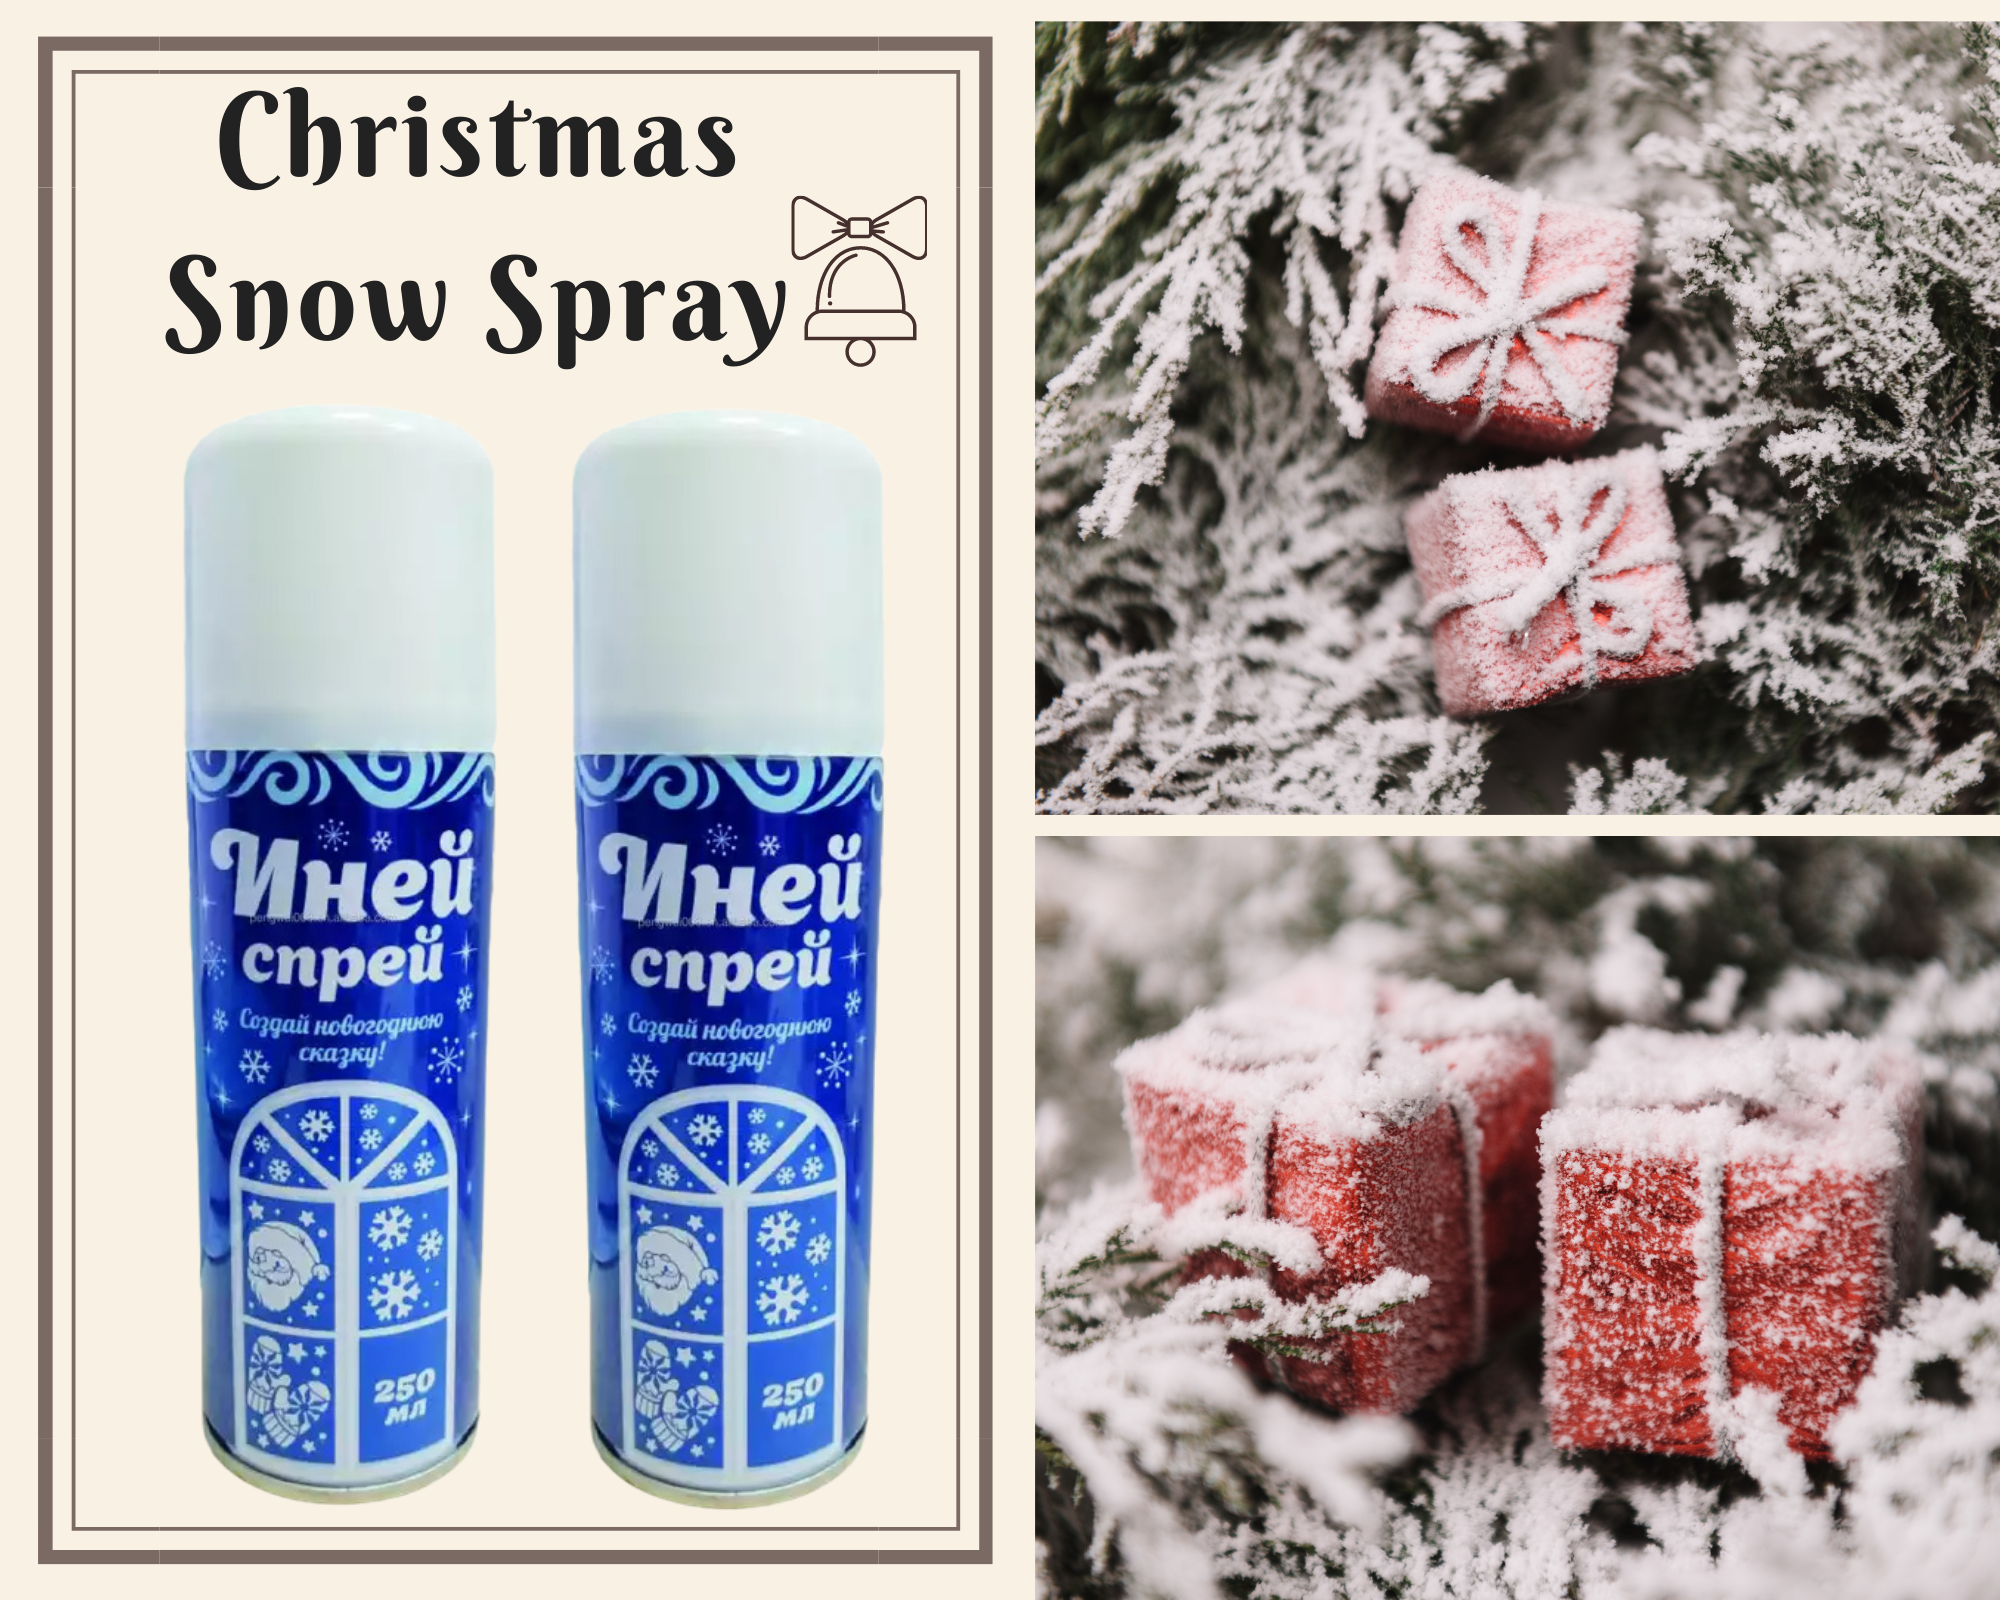 Snow spray for the Winter Wonderland decorative DIY.